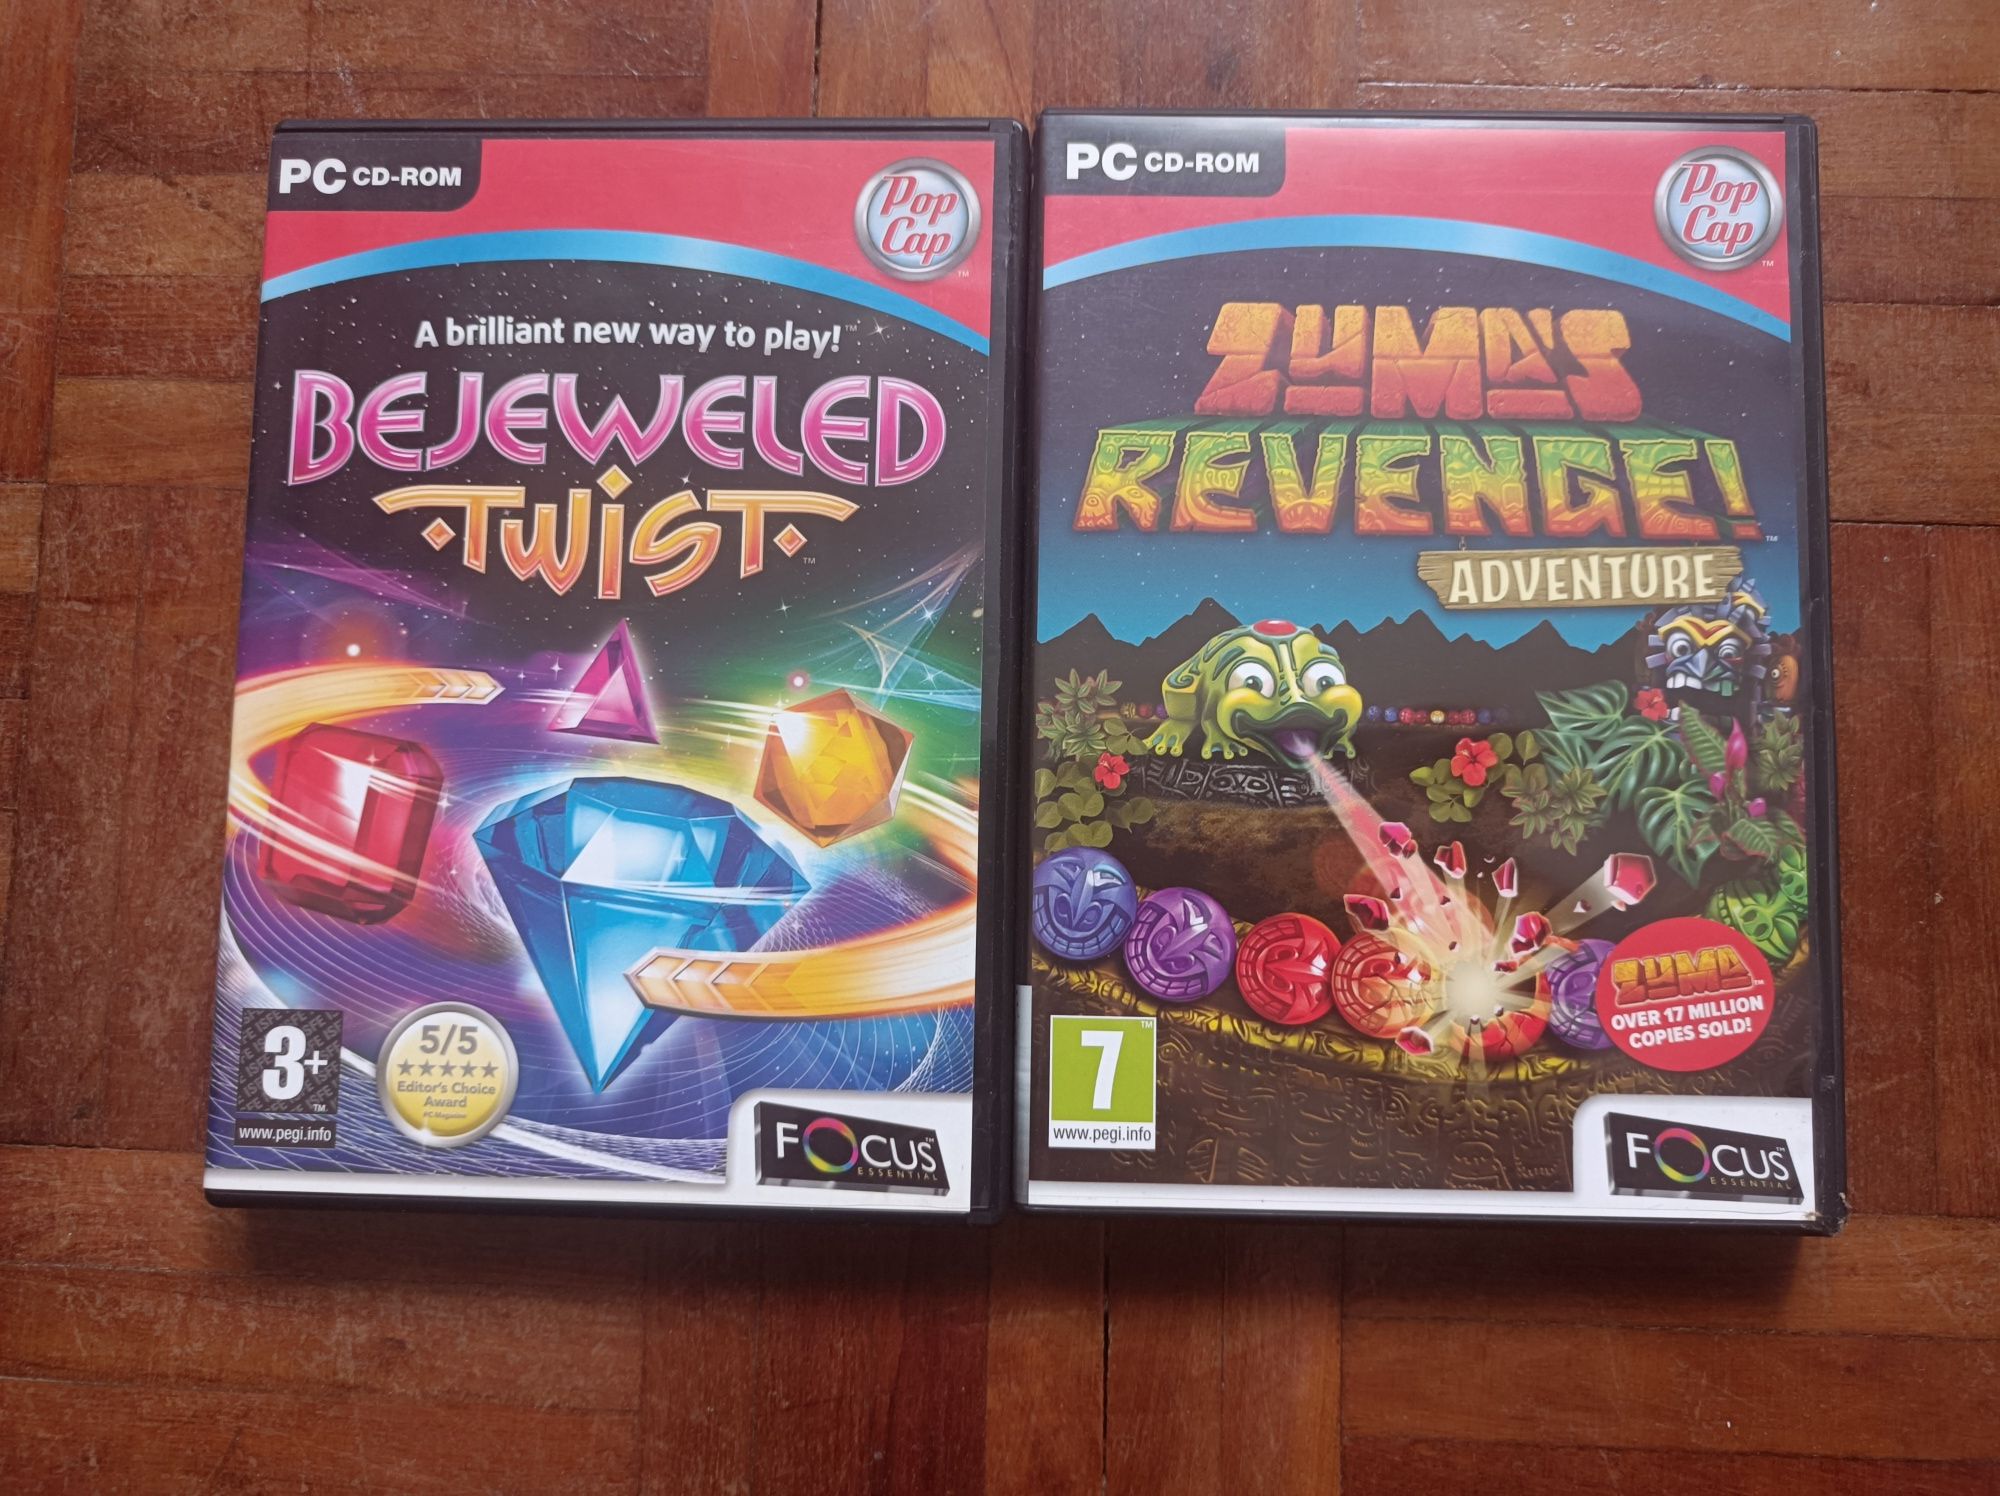 Jogos PC: Bejeweled twist + Zuma's revenge popcap